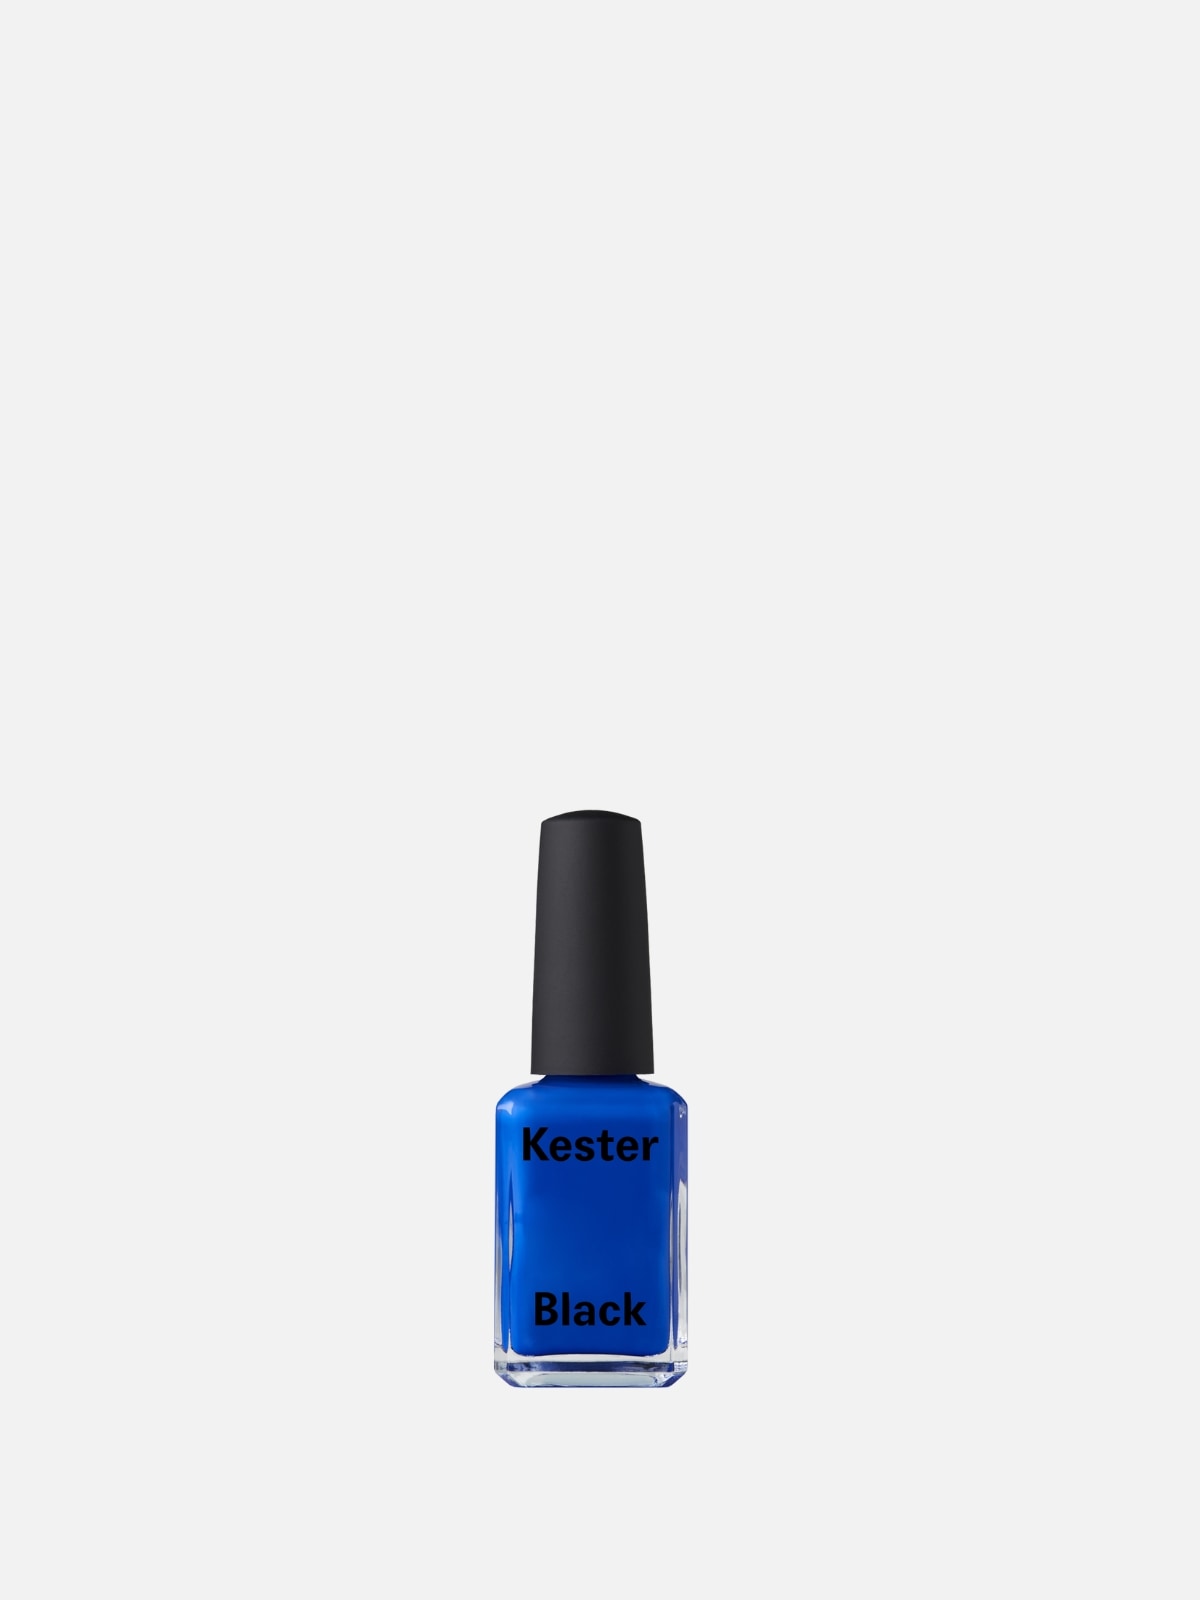 Kester Black - Monarch - Smalto color blu elettrico